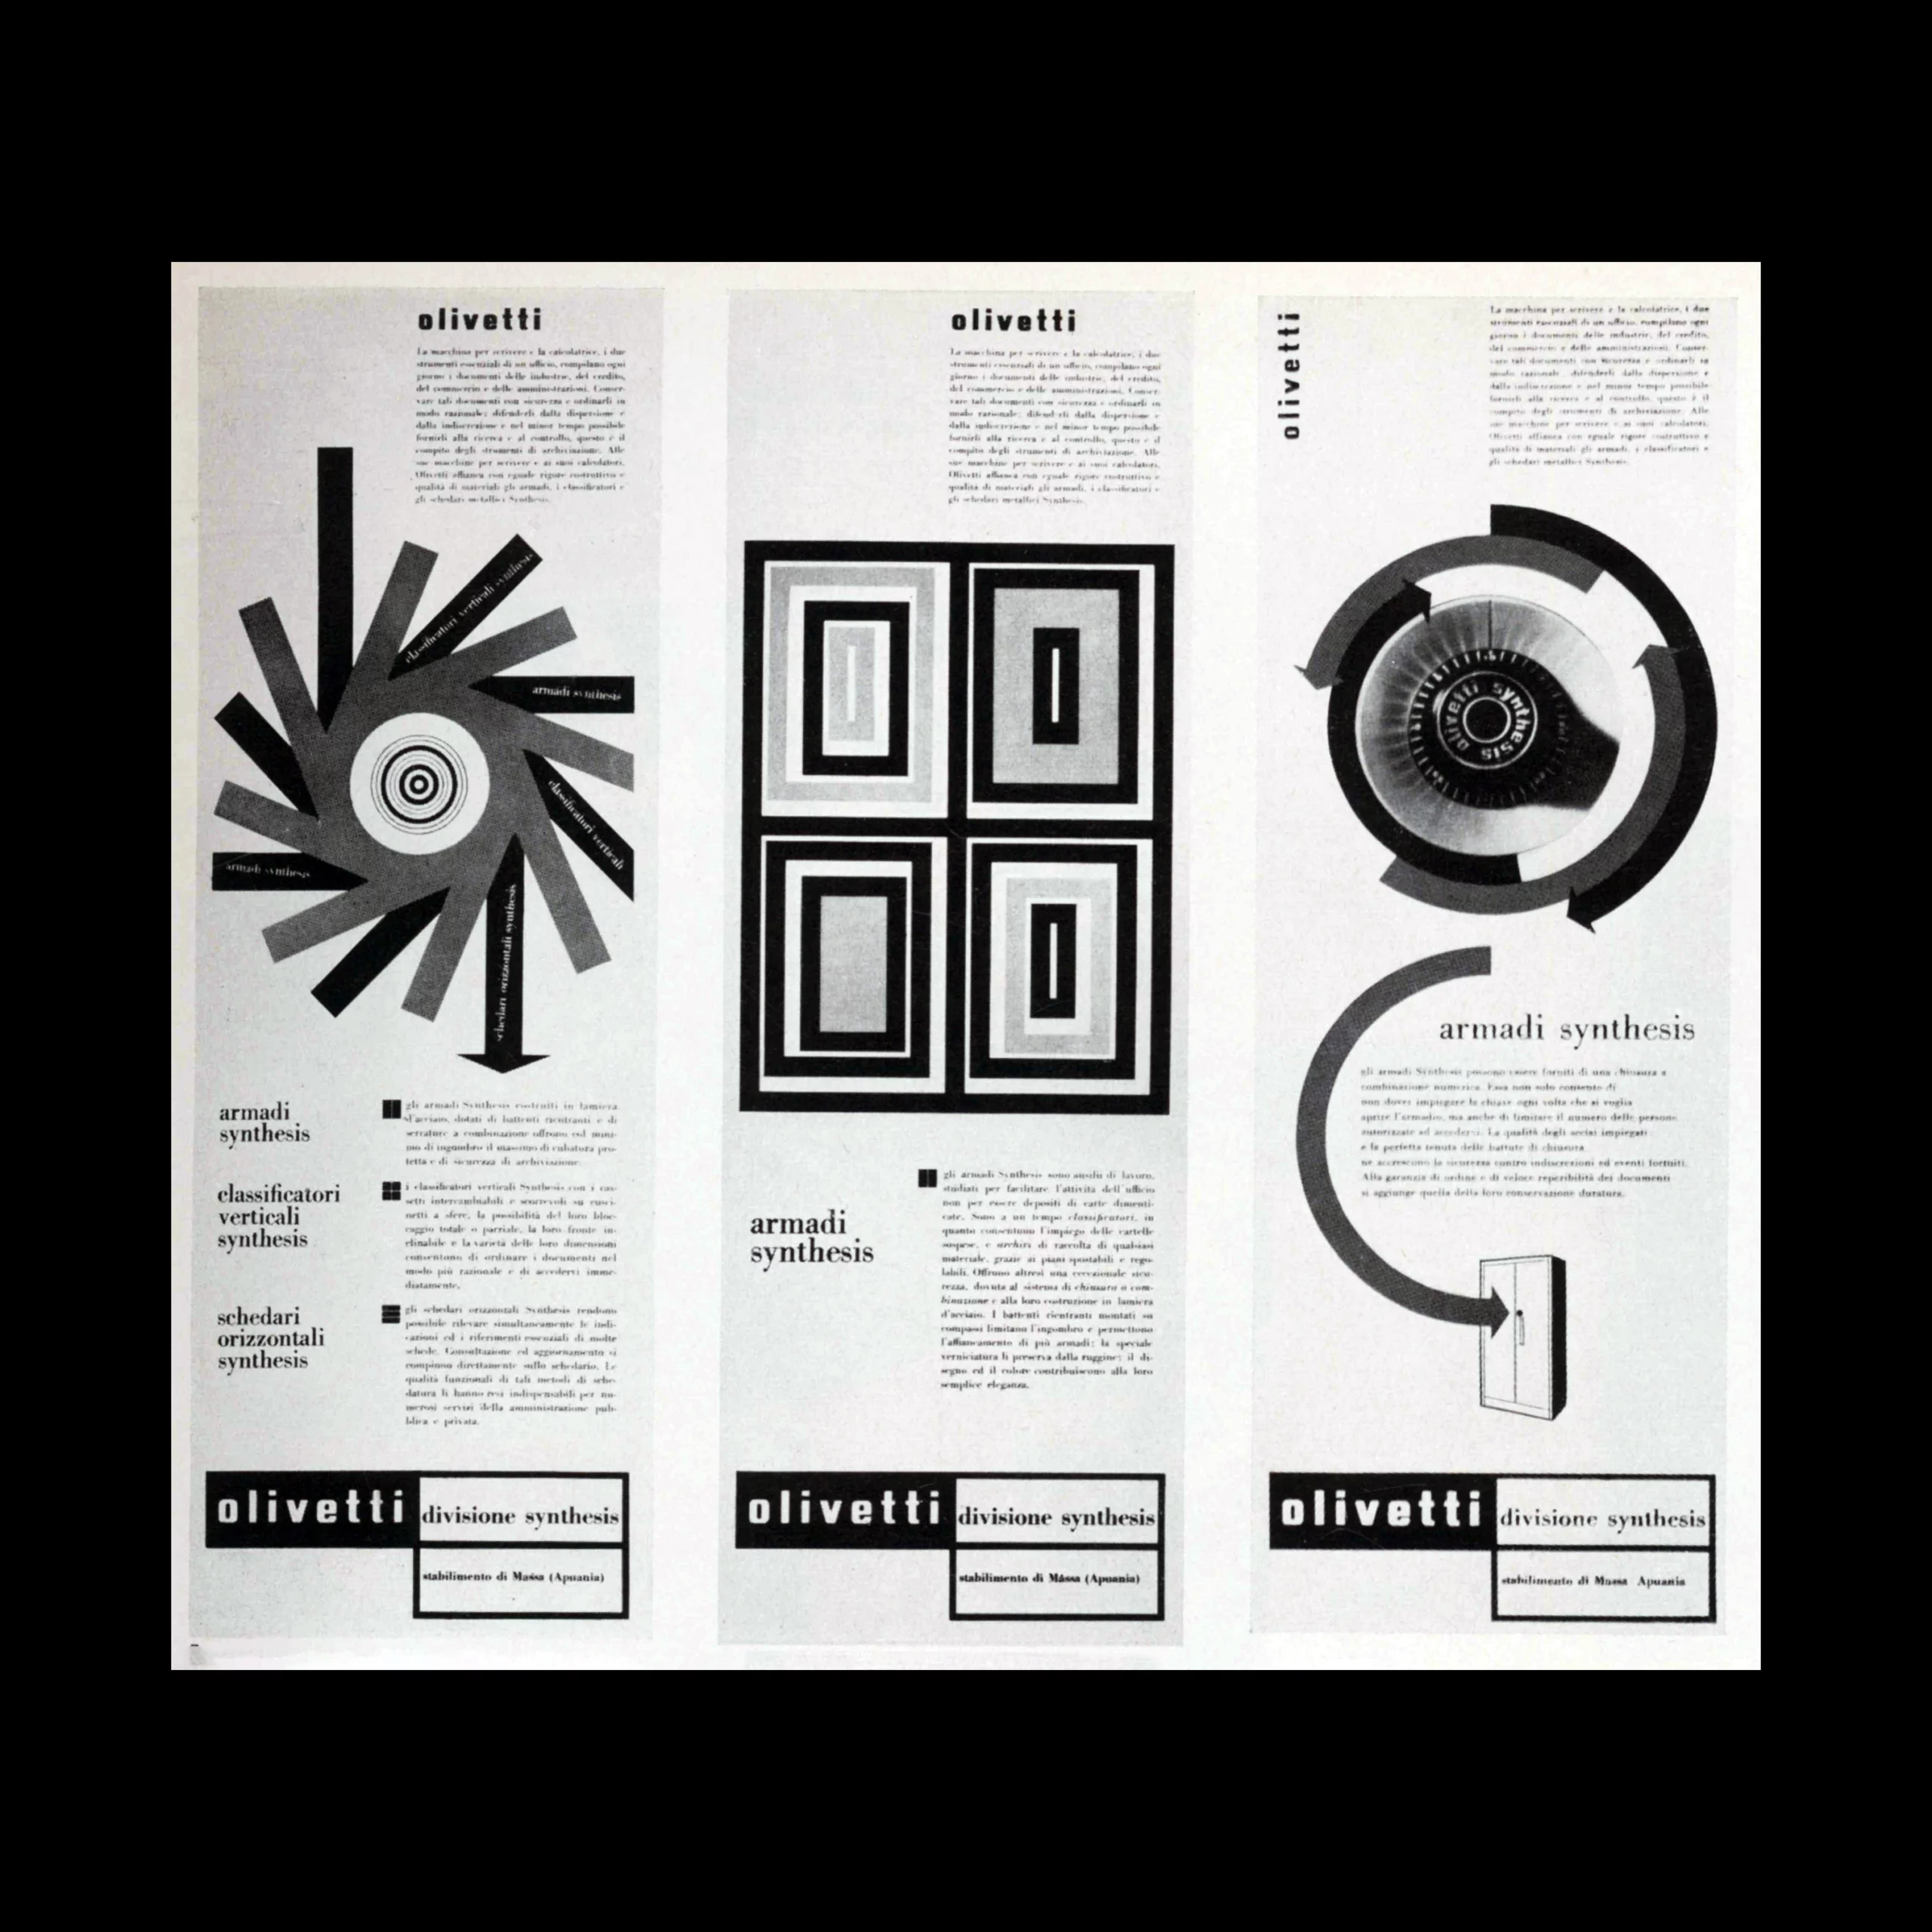 Olivetti advertisements designed by Walter Ballmer. Scanned from Gebrauchgraphik, 1, 1958